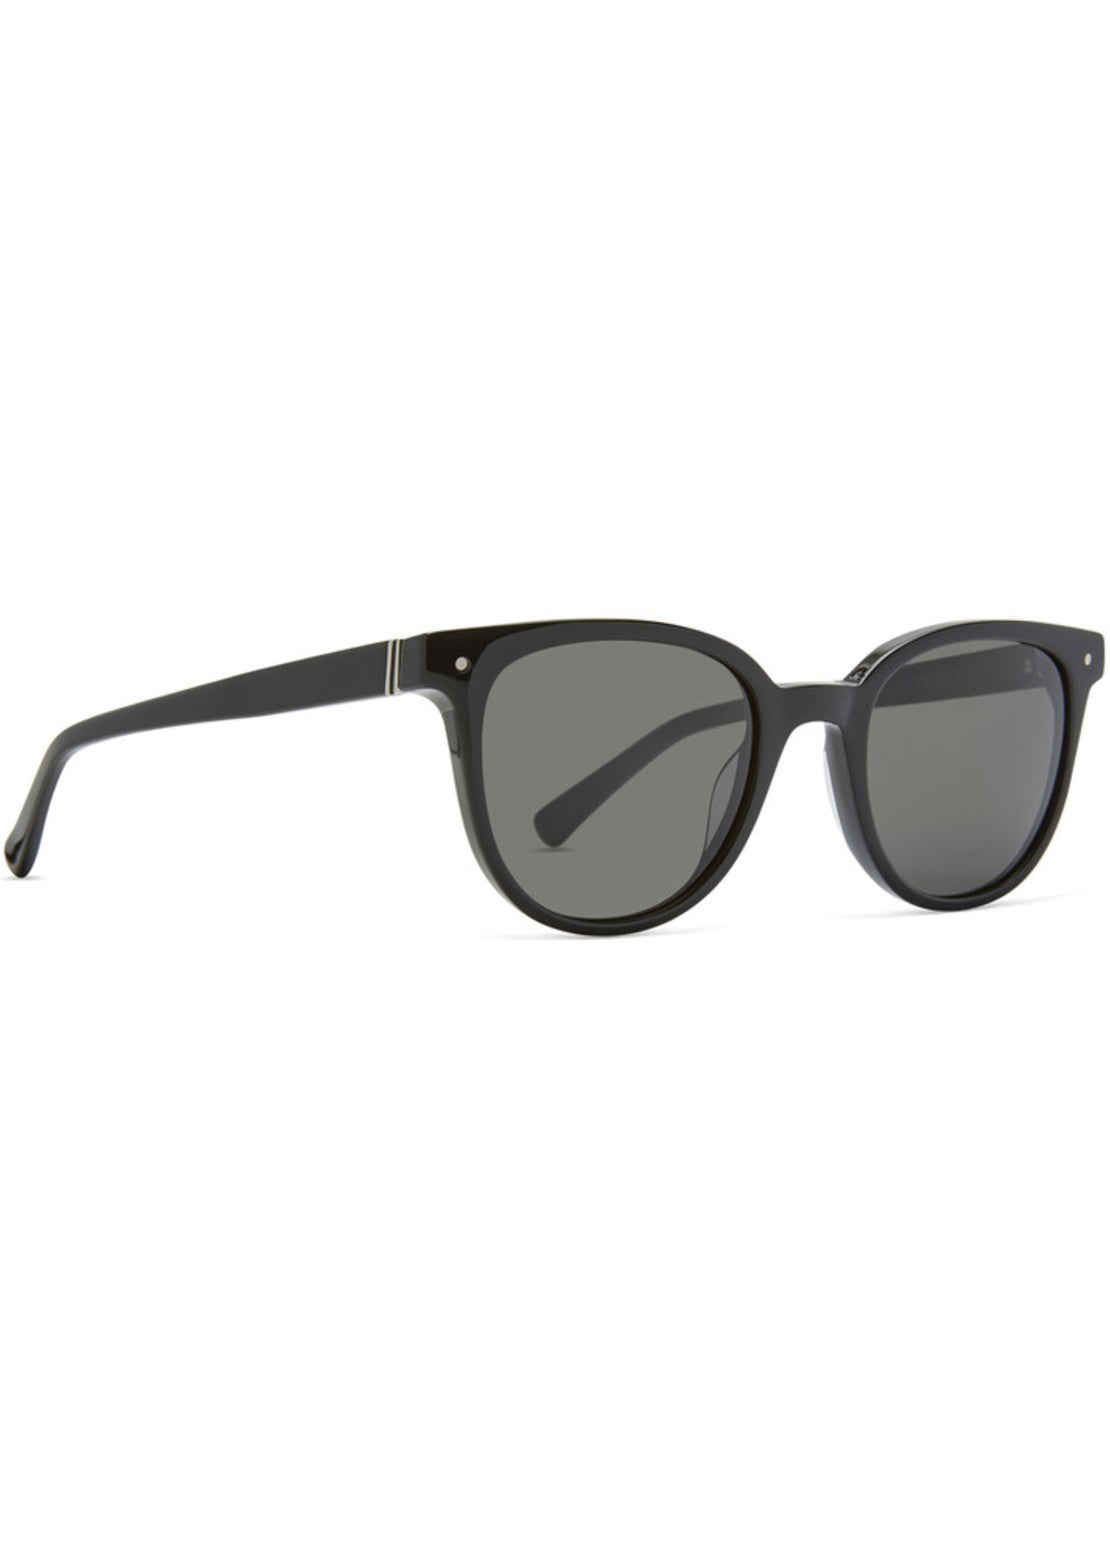 Von Zipper Jethro Sunglasses Black Gloss/Vintage Grey